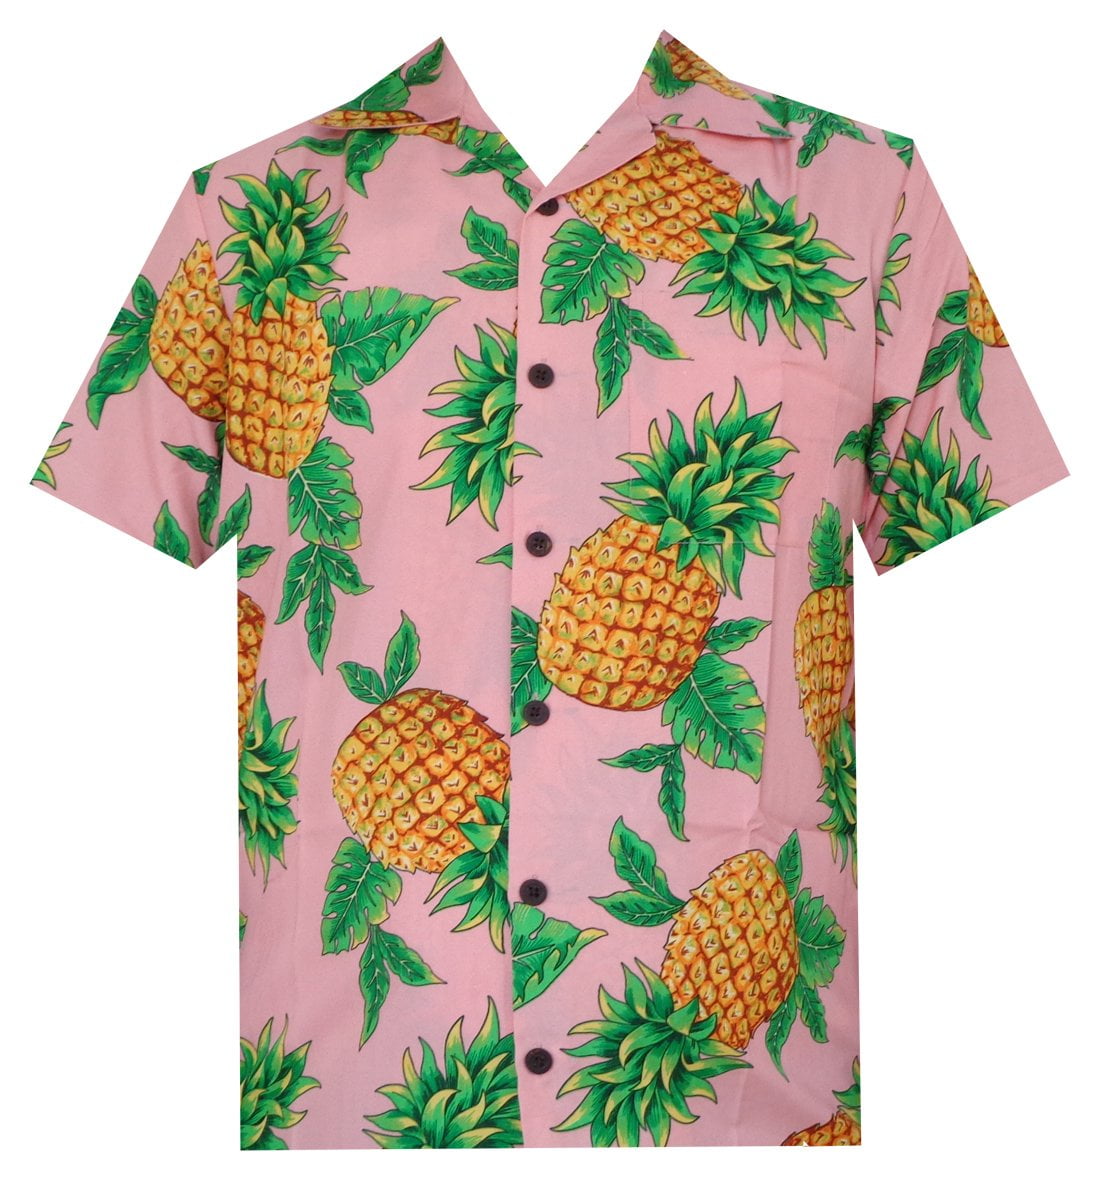 Men's Pineapple Hawaiian Shirt Casual Tropical Beach Cotton Short Sleeve Shirt